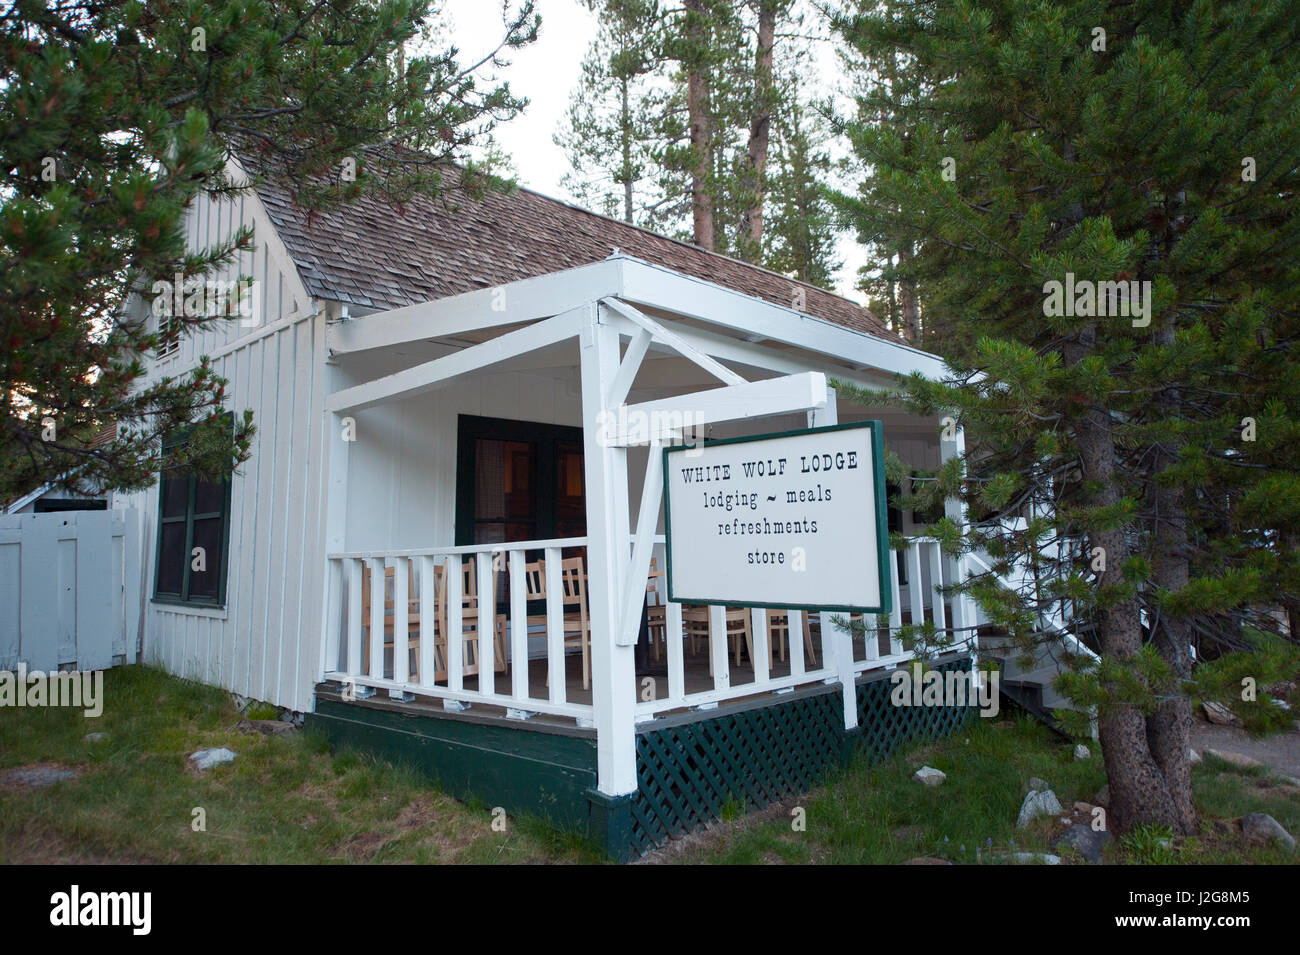 USA, California, Yosemite National Park, White Wolf Lodge dining Room and Store Stock Photo